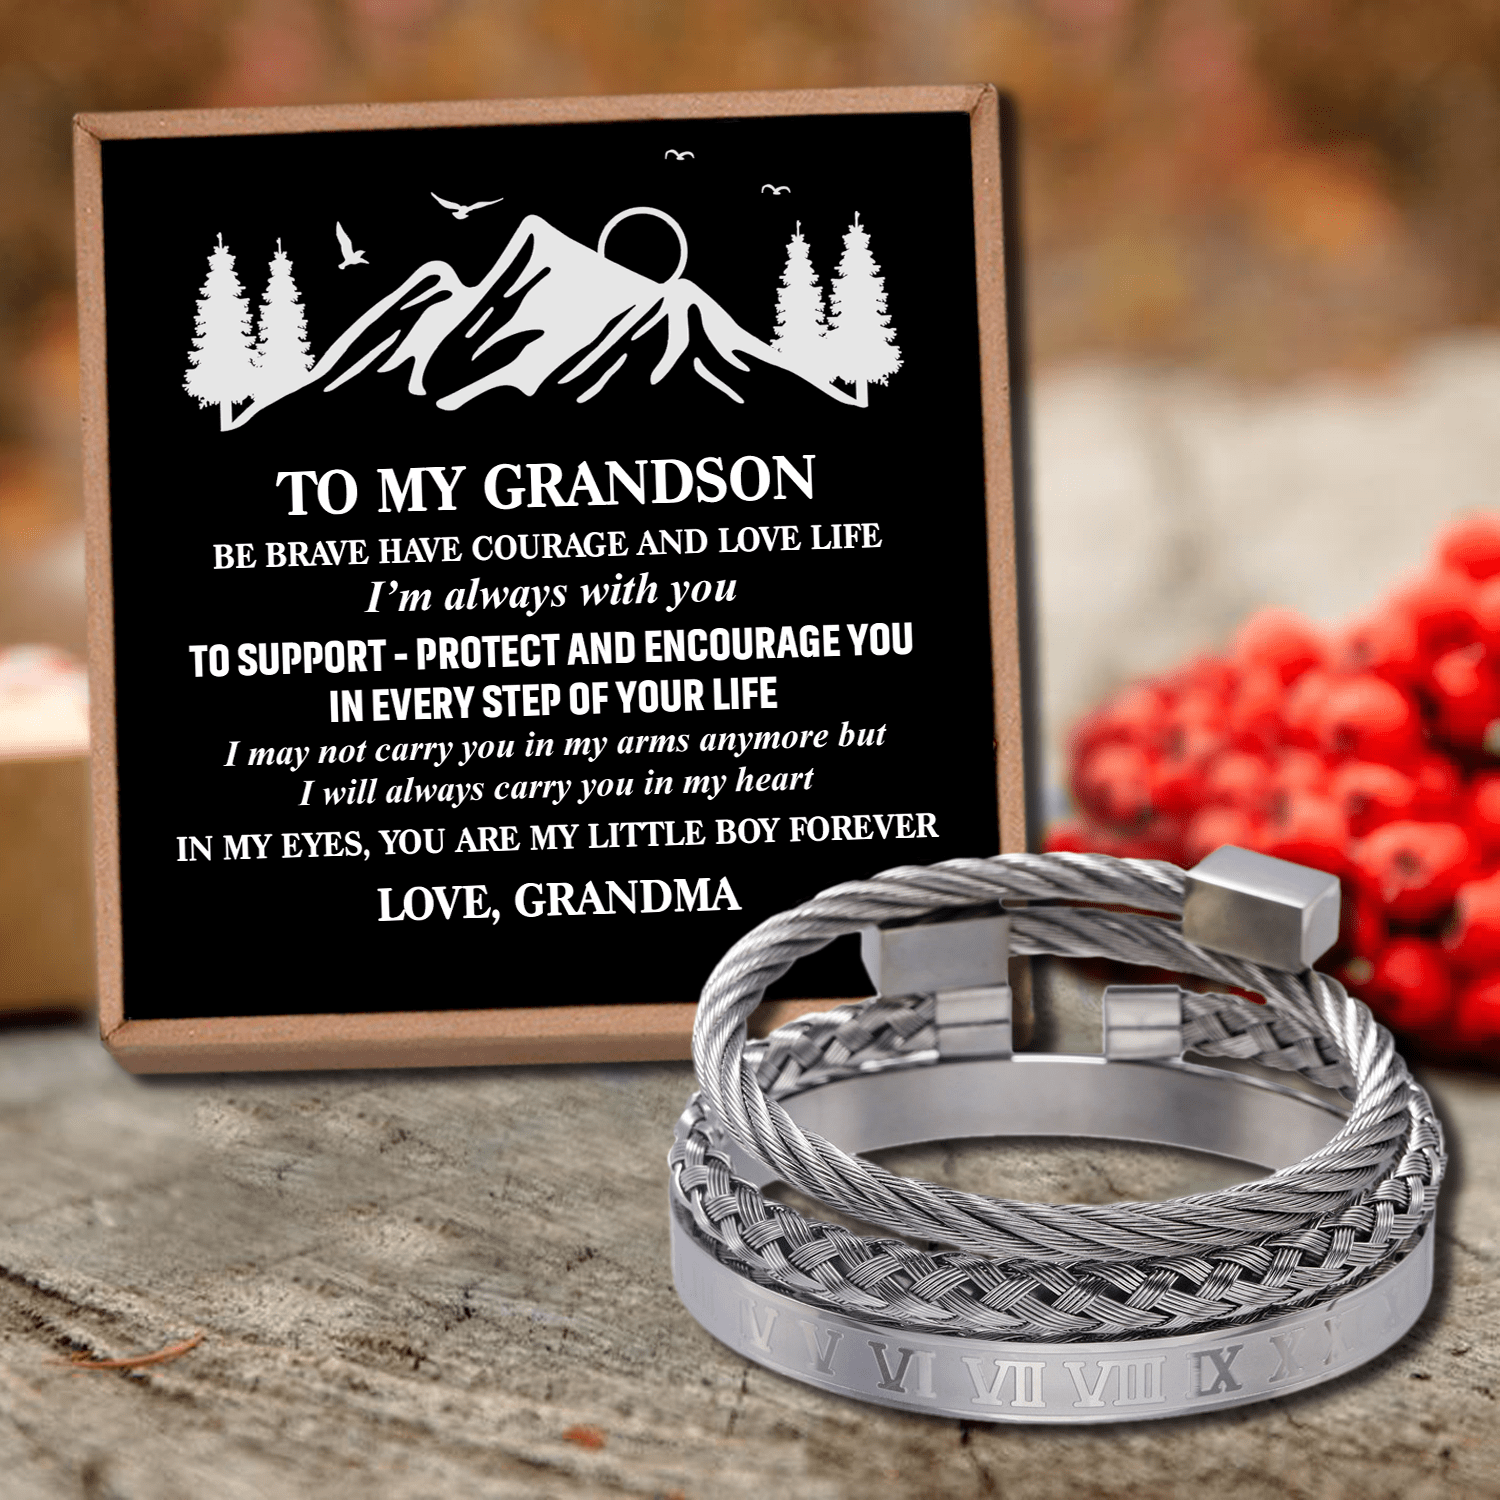 Bracelets Grandma To Grandson - My Little Boy Forever Roman Numeral Bracelet Set Silver GiveMe-Gifts